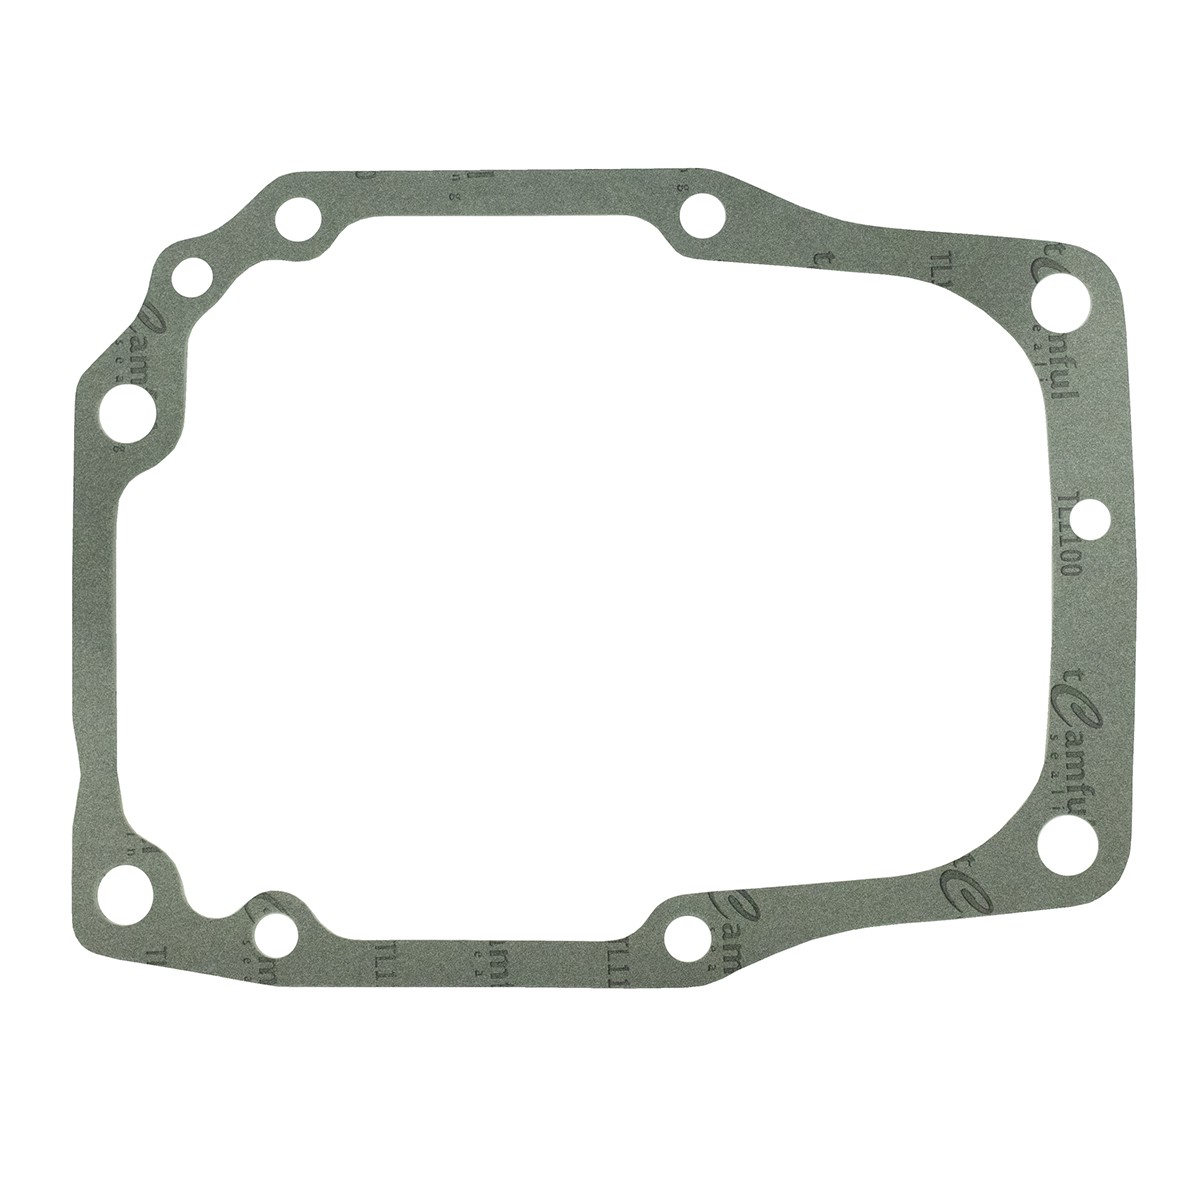 Gearbox seal Yanmar EF 453 T / 5-15-112-26 / 198240-24140